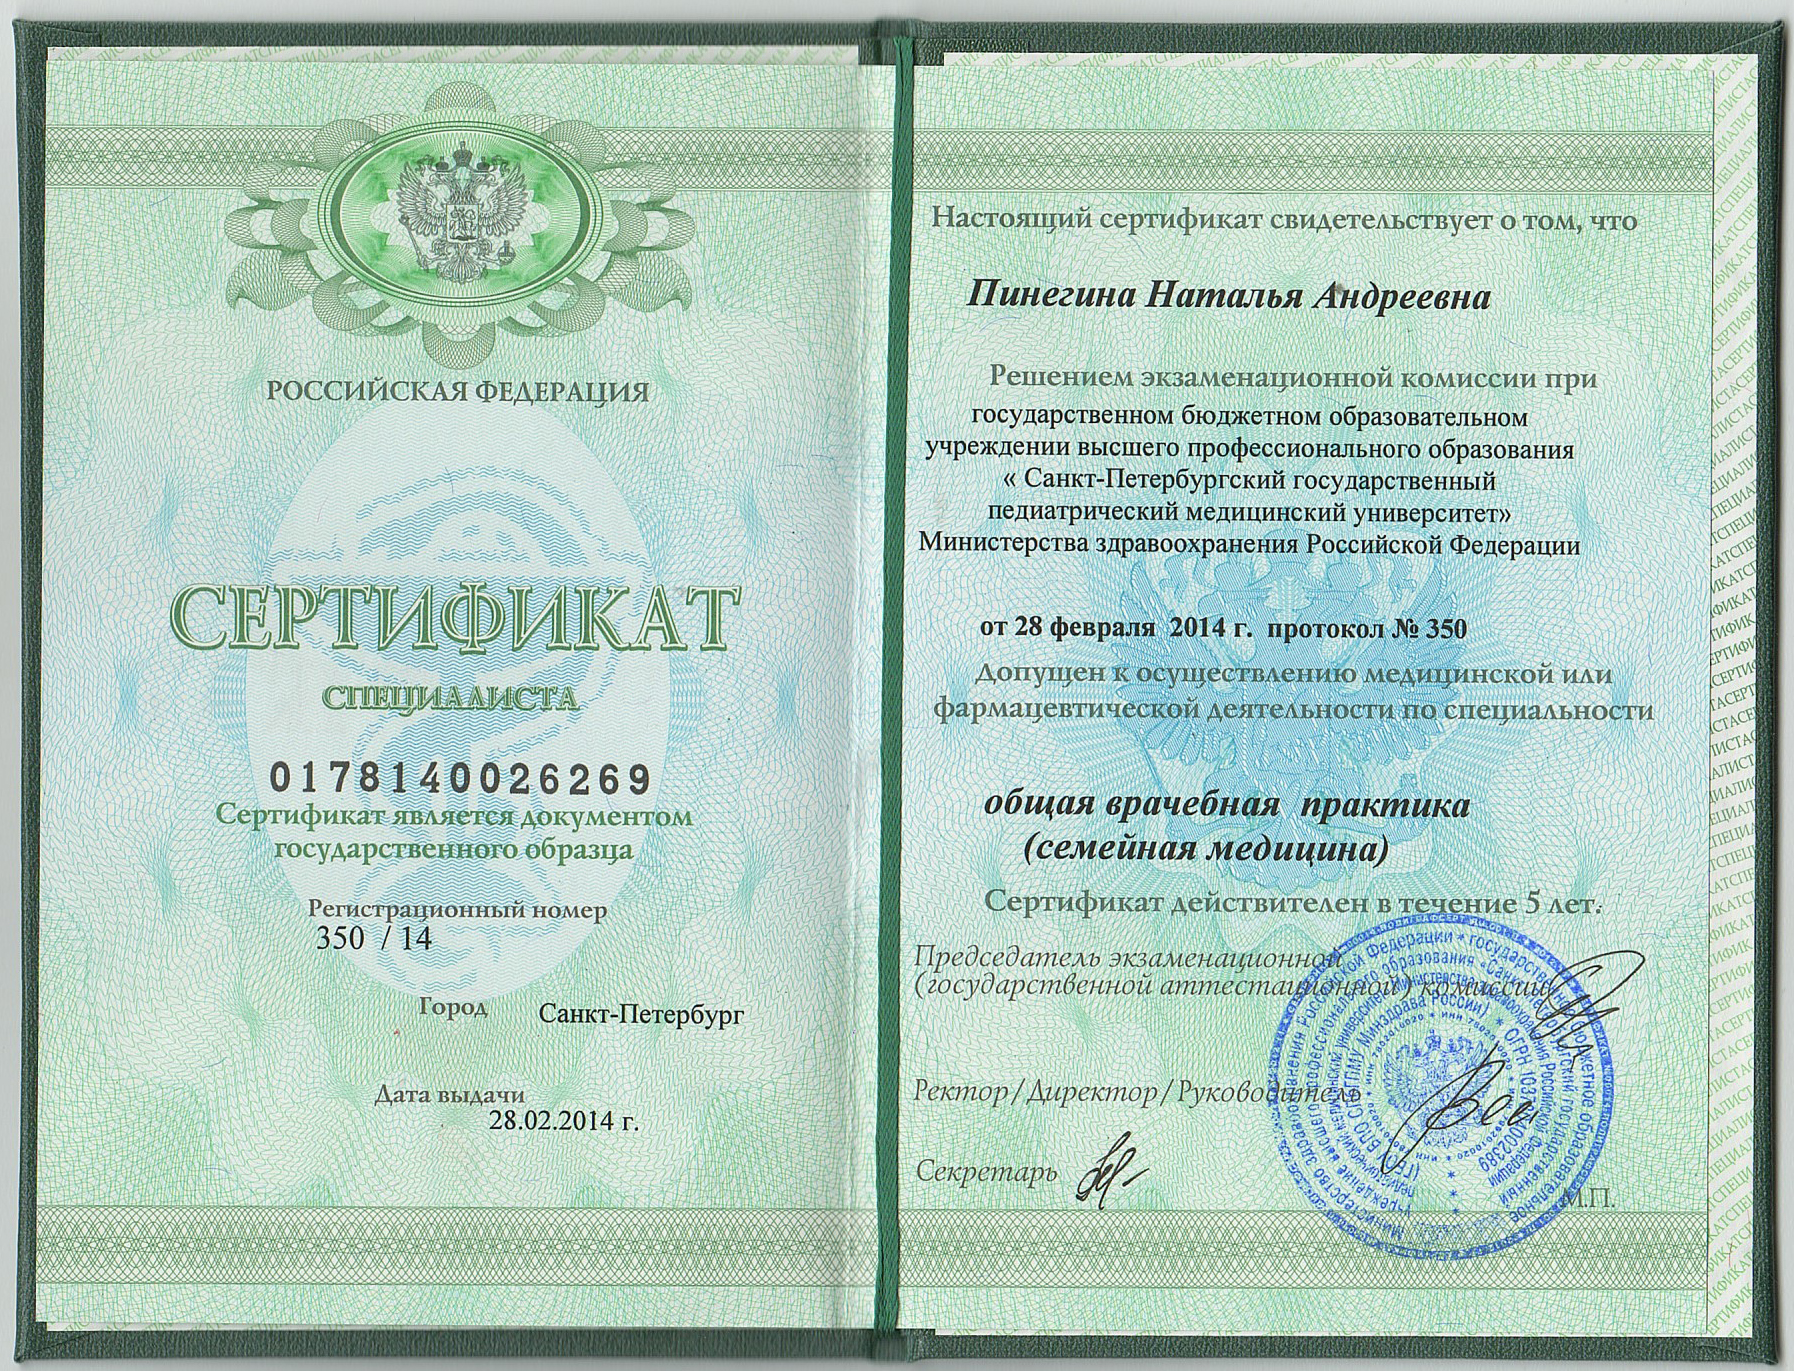 Сертификат врача врача общей практики